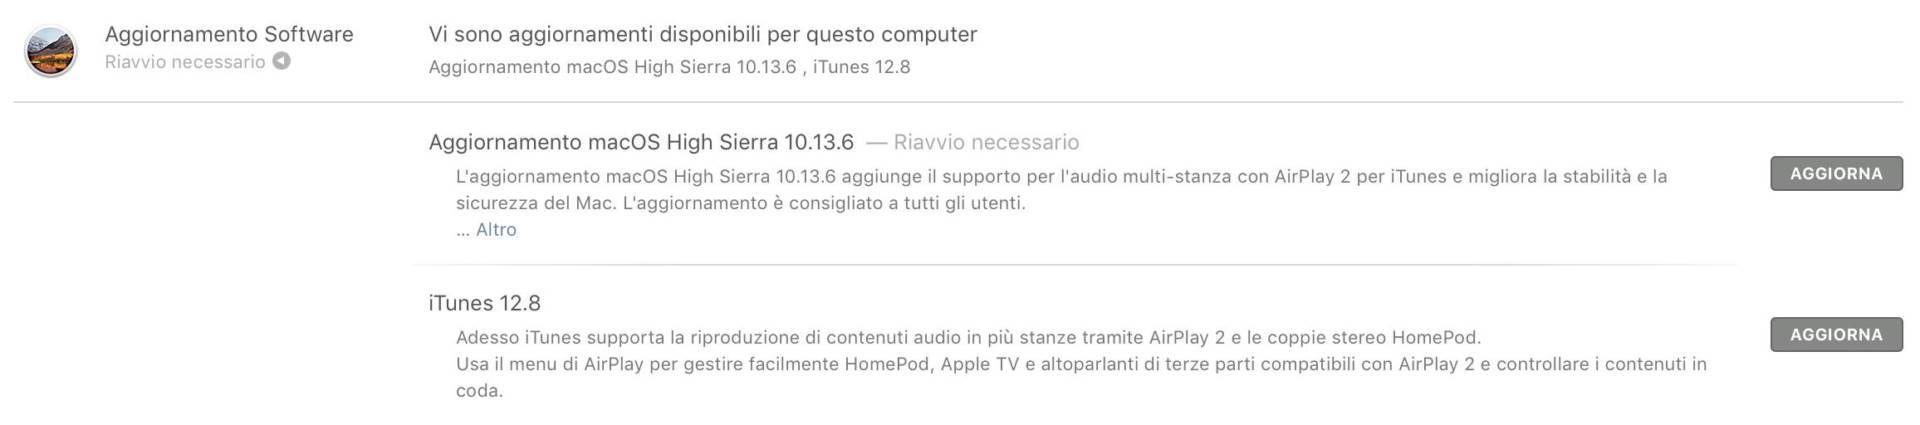 Apple rilascia macOS HigSierra 10.13.6 con supporto ad AirPlay 2 1